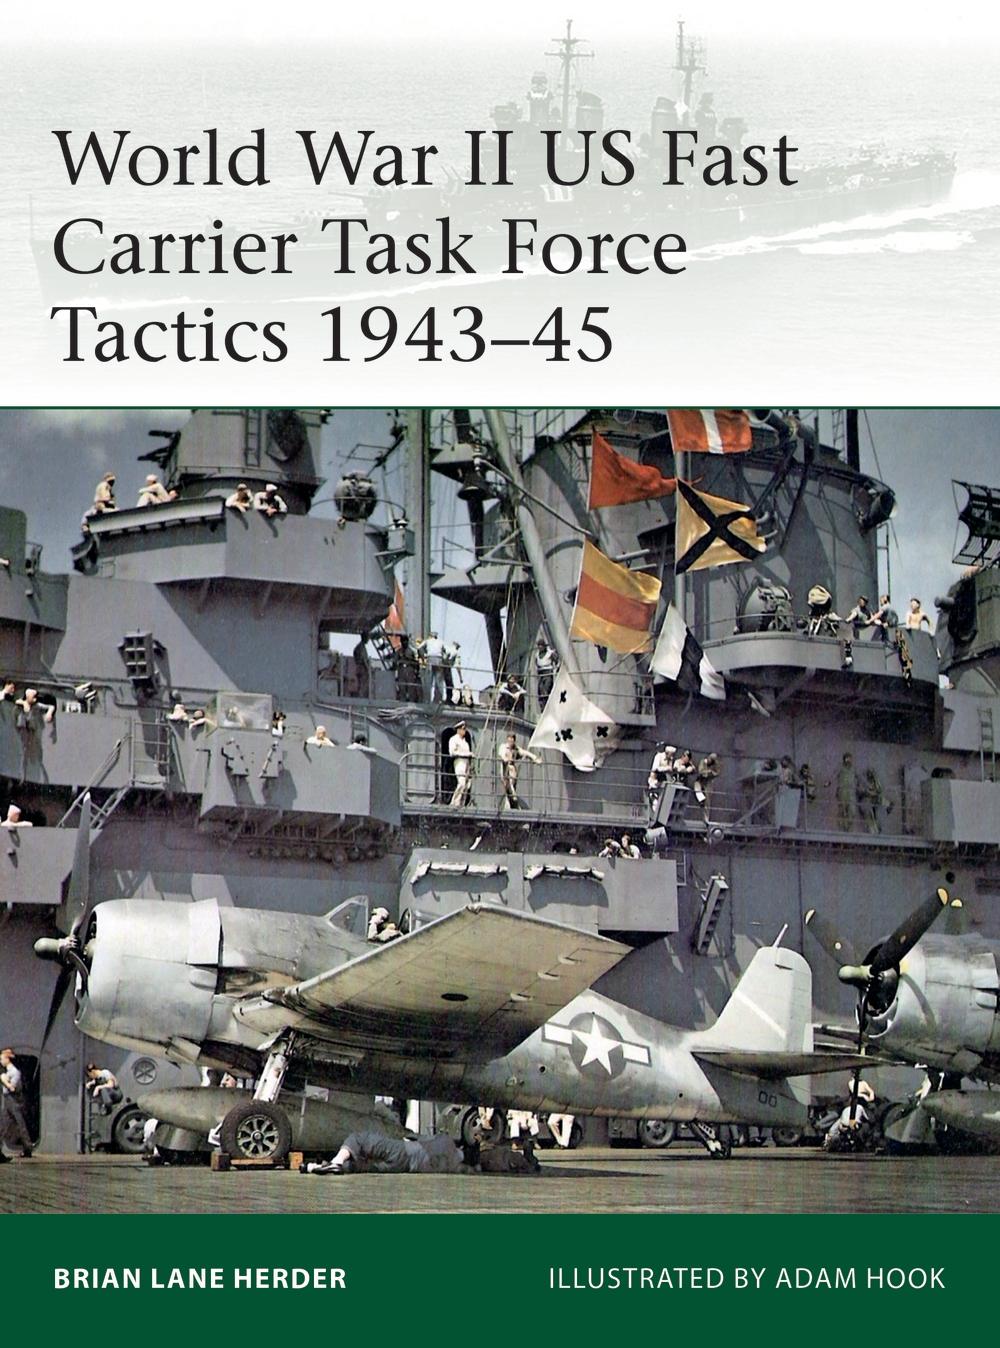 World War II US Fast Carrier Task Force Tactics 1943-45 - Brian Lane Herder